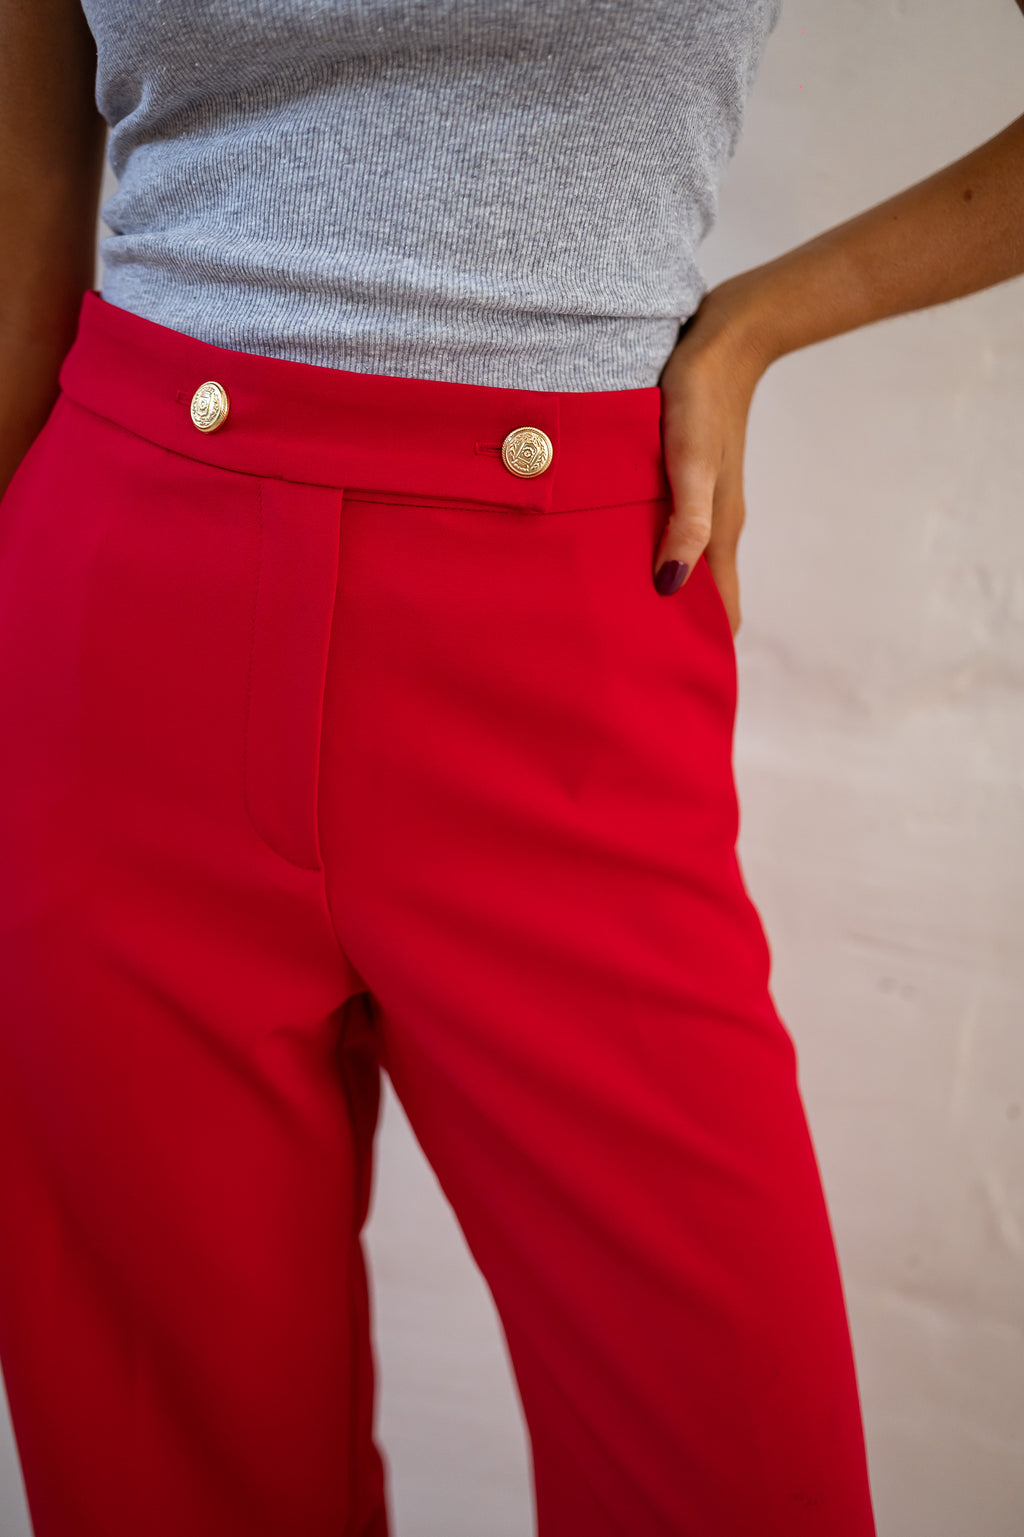 Maona pants - red